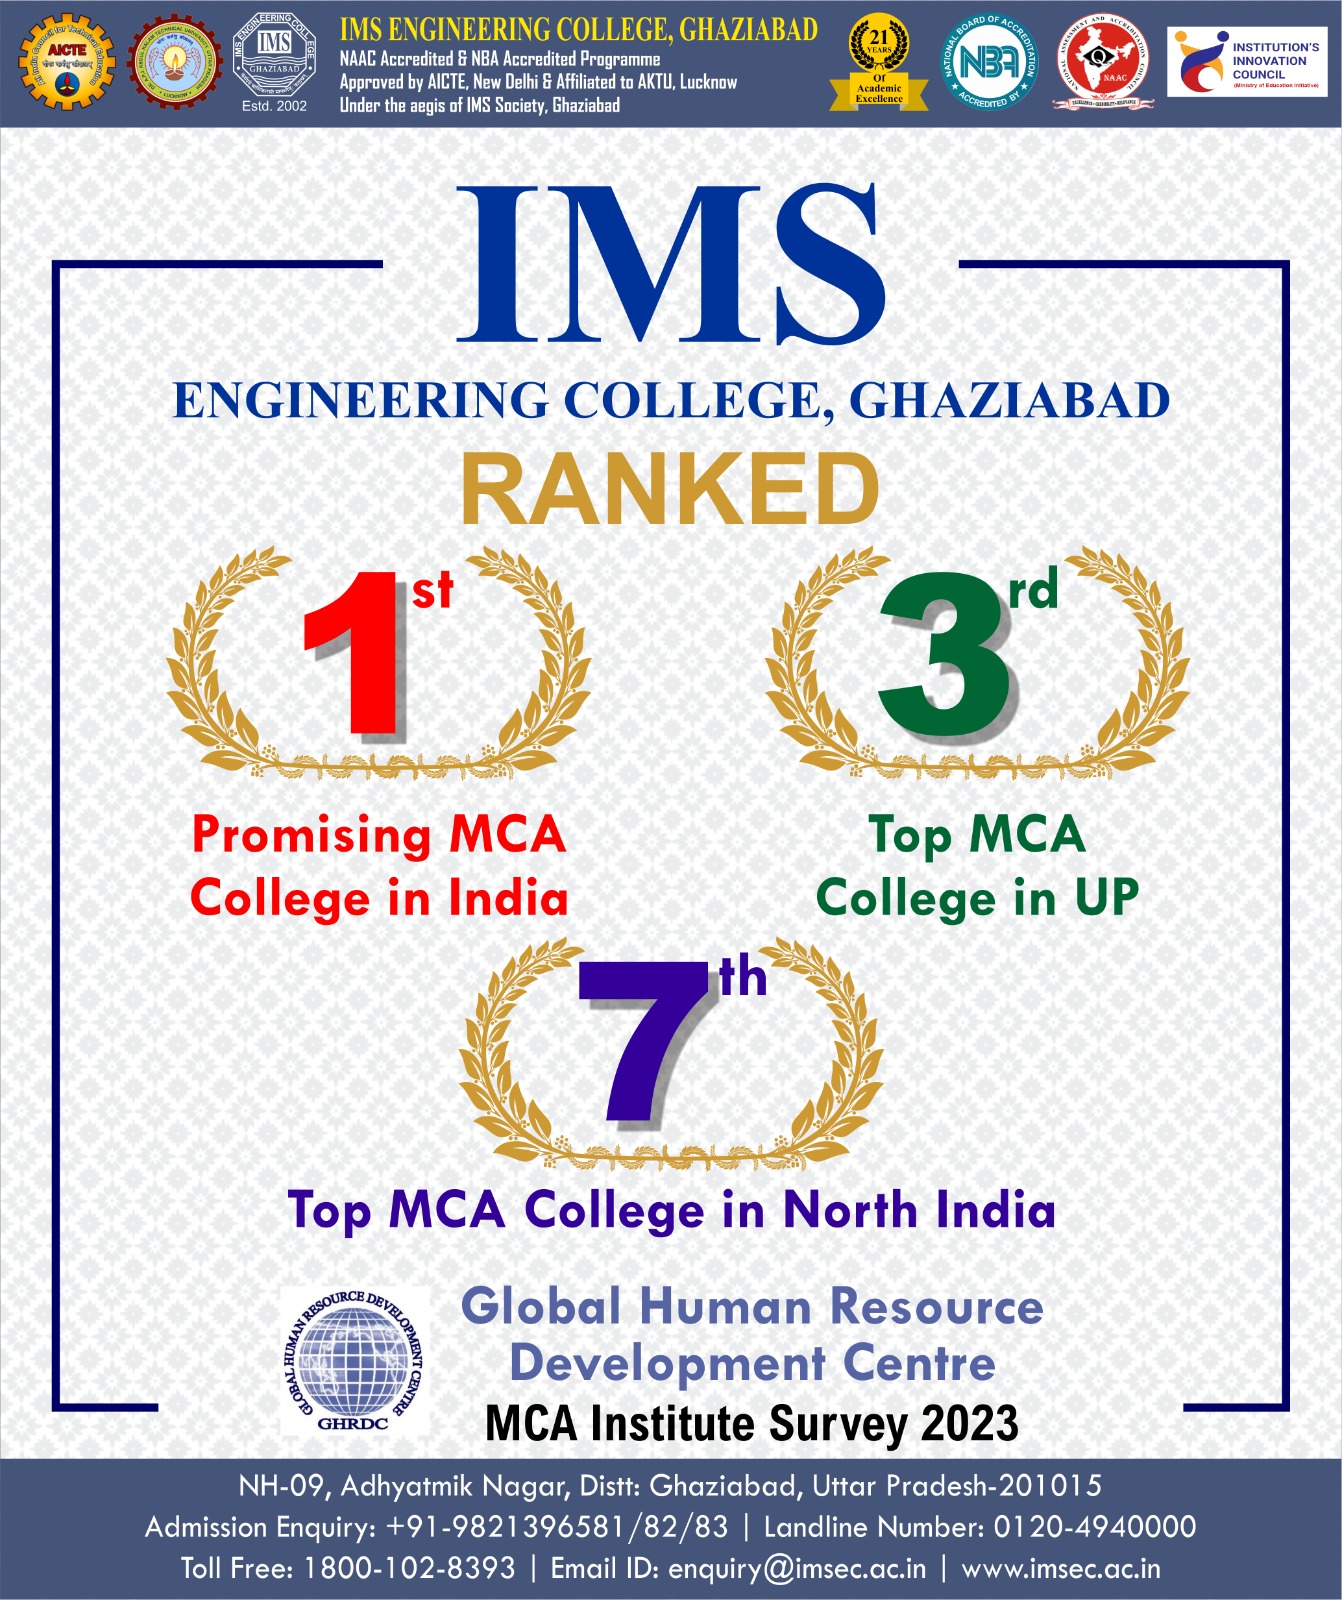 Ranked 1st under Promising MCA College in India